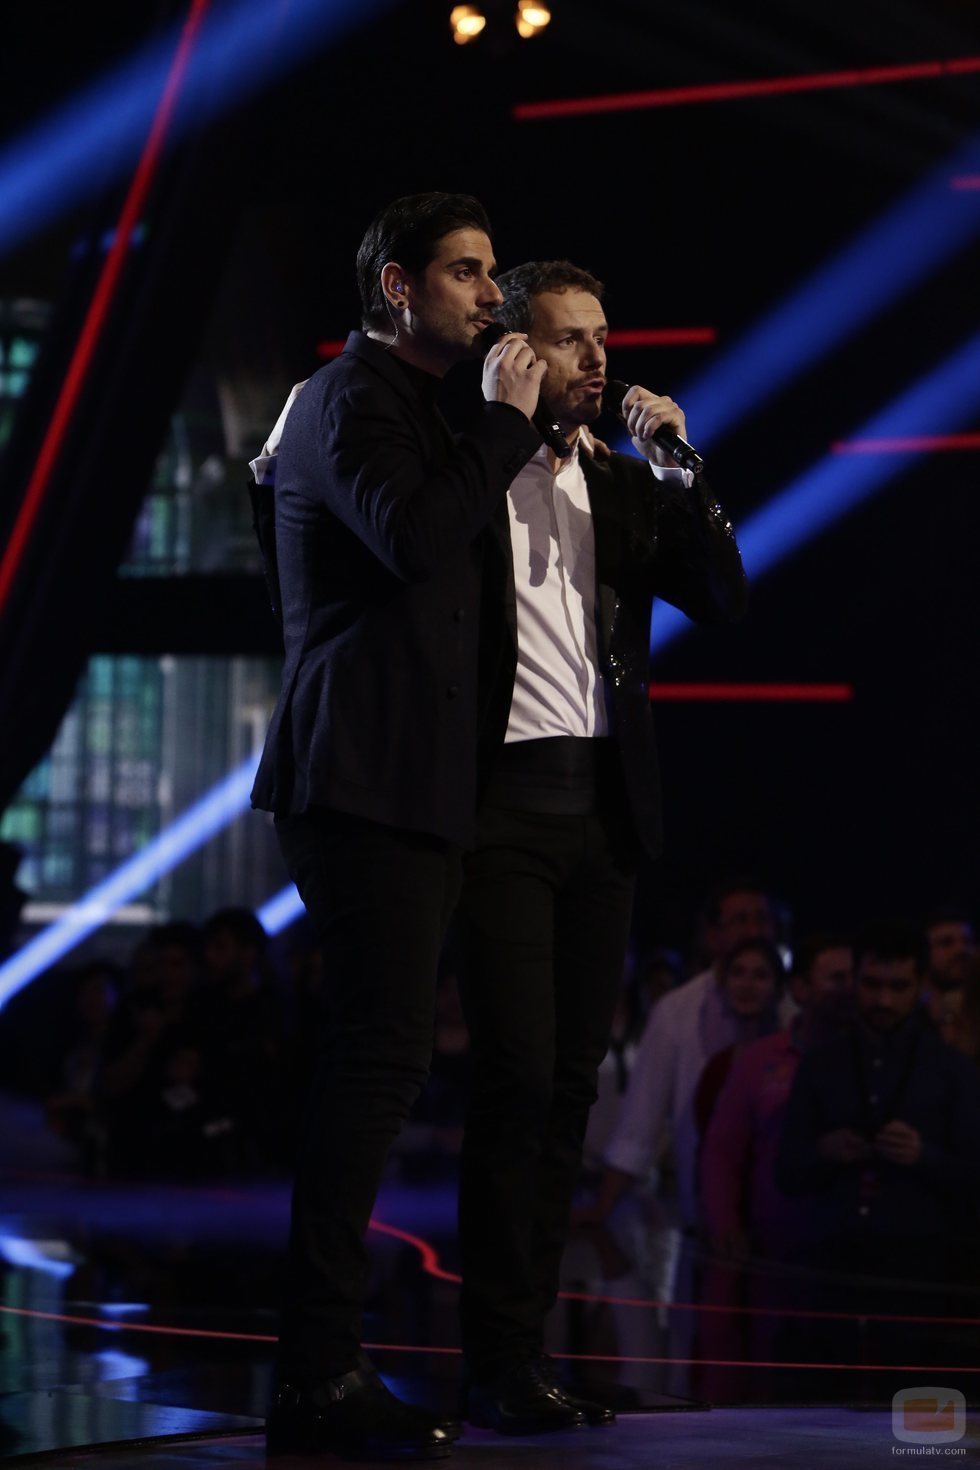 Ángel Cortés y Melendi cantan "Besos a la Lona" en la gran final de 'La Voz'